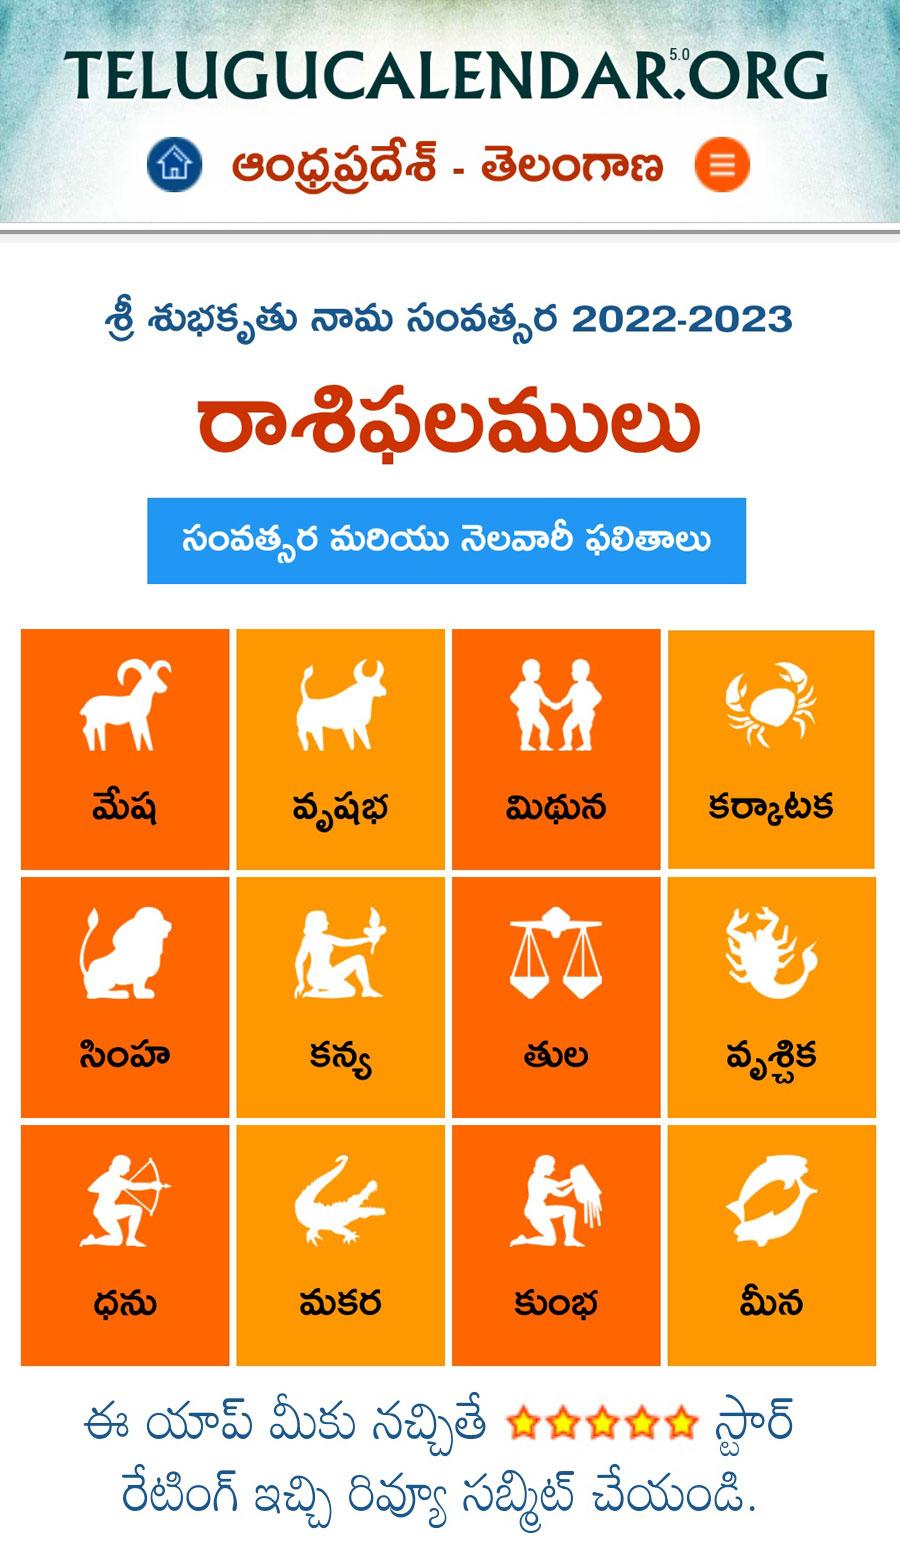 Telugu New Jersey Calendar 2022 Telugu Calendar 2022 Festivals For Android - Apk Download